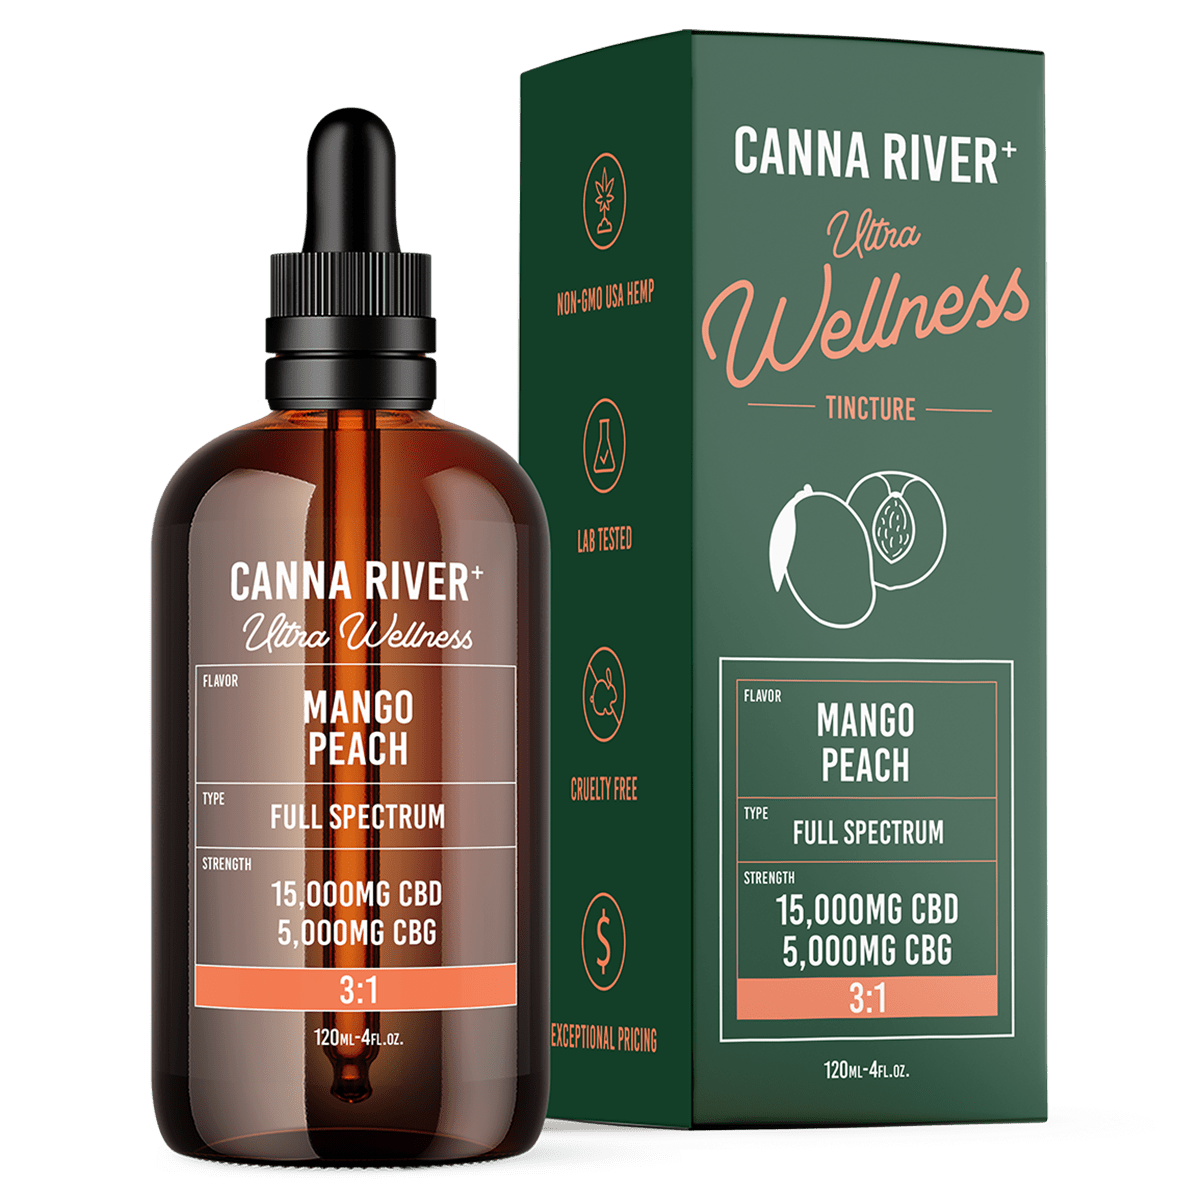 Canna River - Full Spectrum CBD/CBG Ultra Wellness Tincture - Mango Peach - 120mL